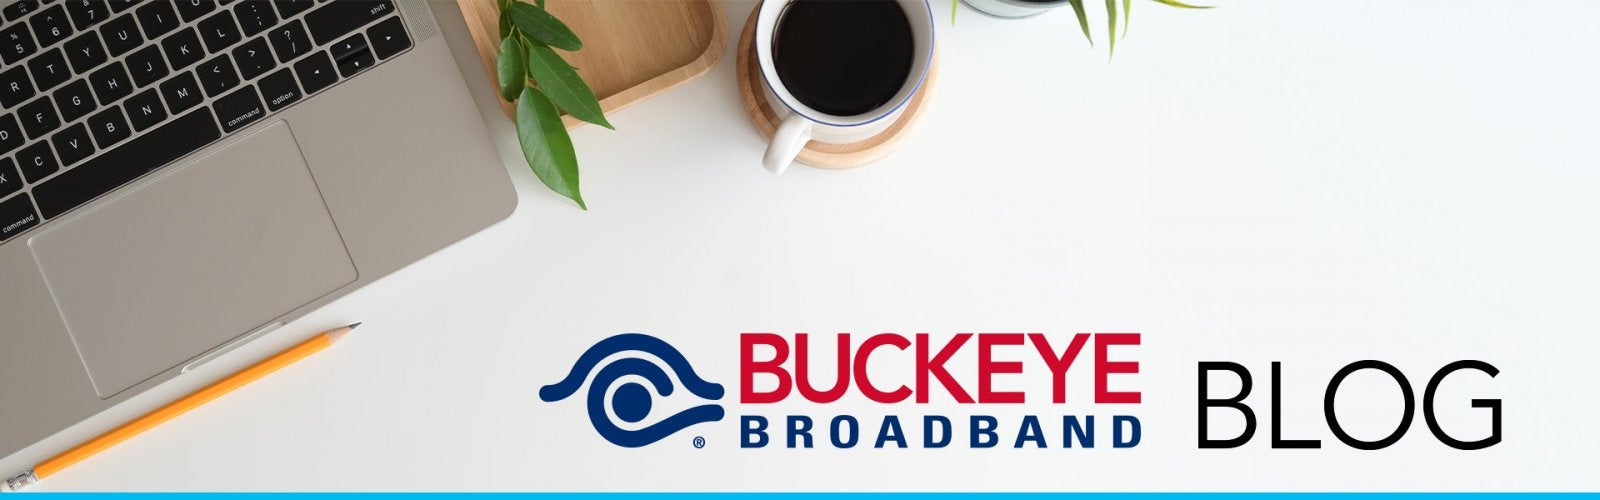 top view of laptop and coffee mug with text that says buckeye broadband blog